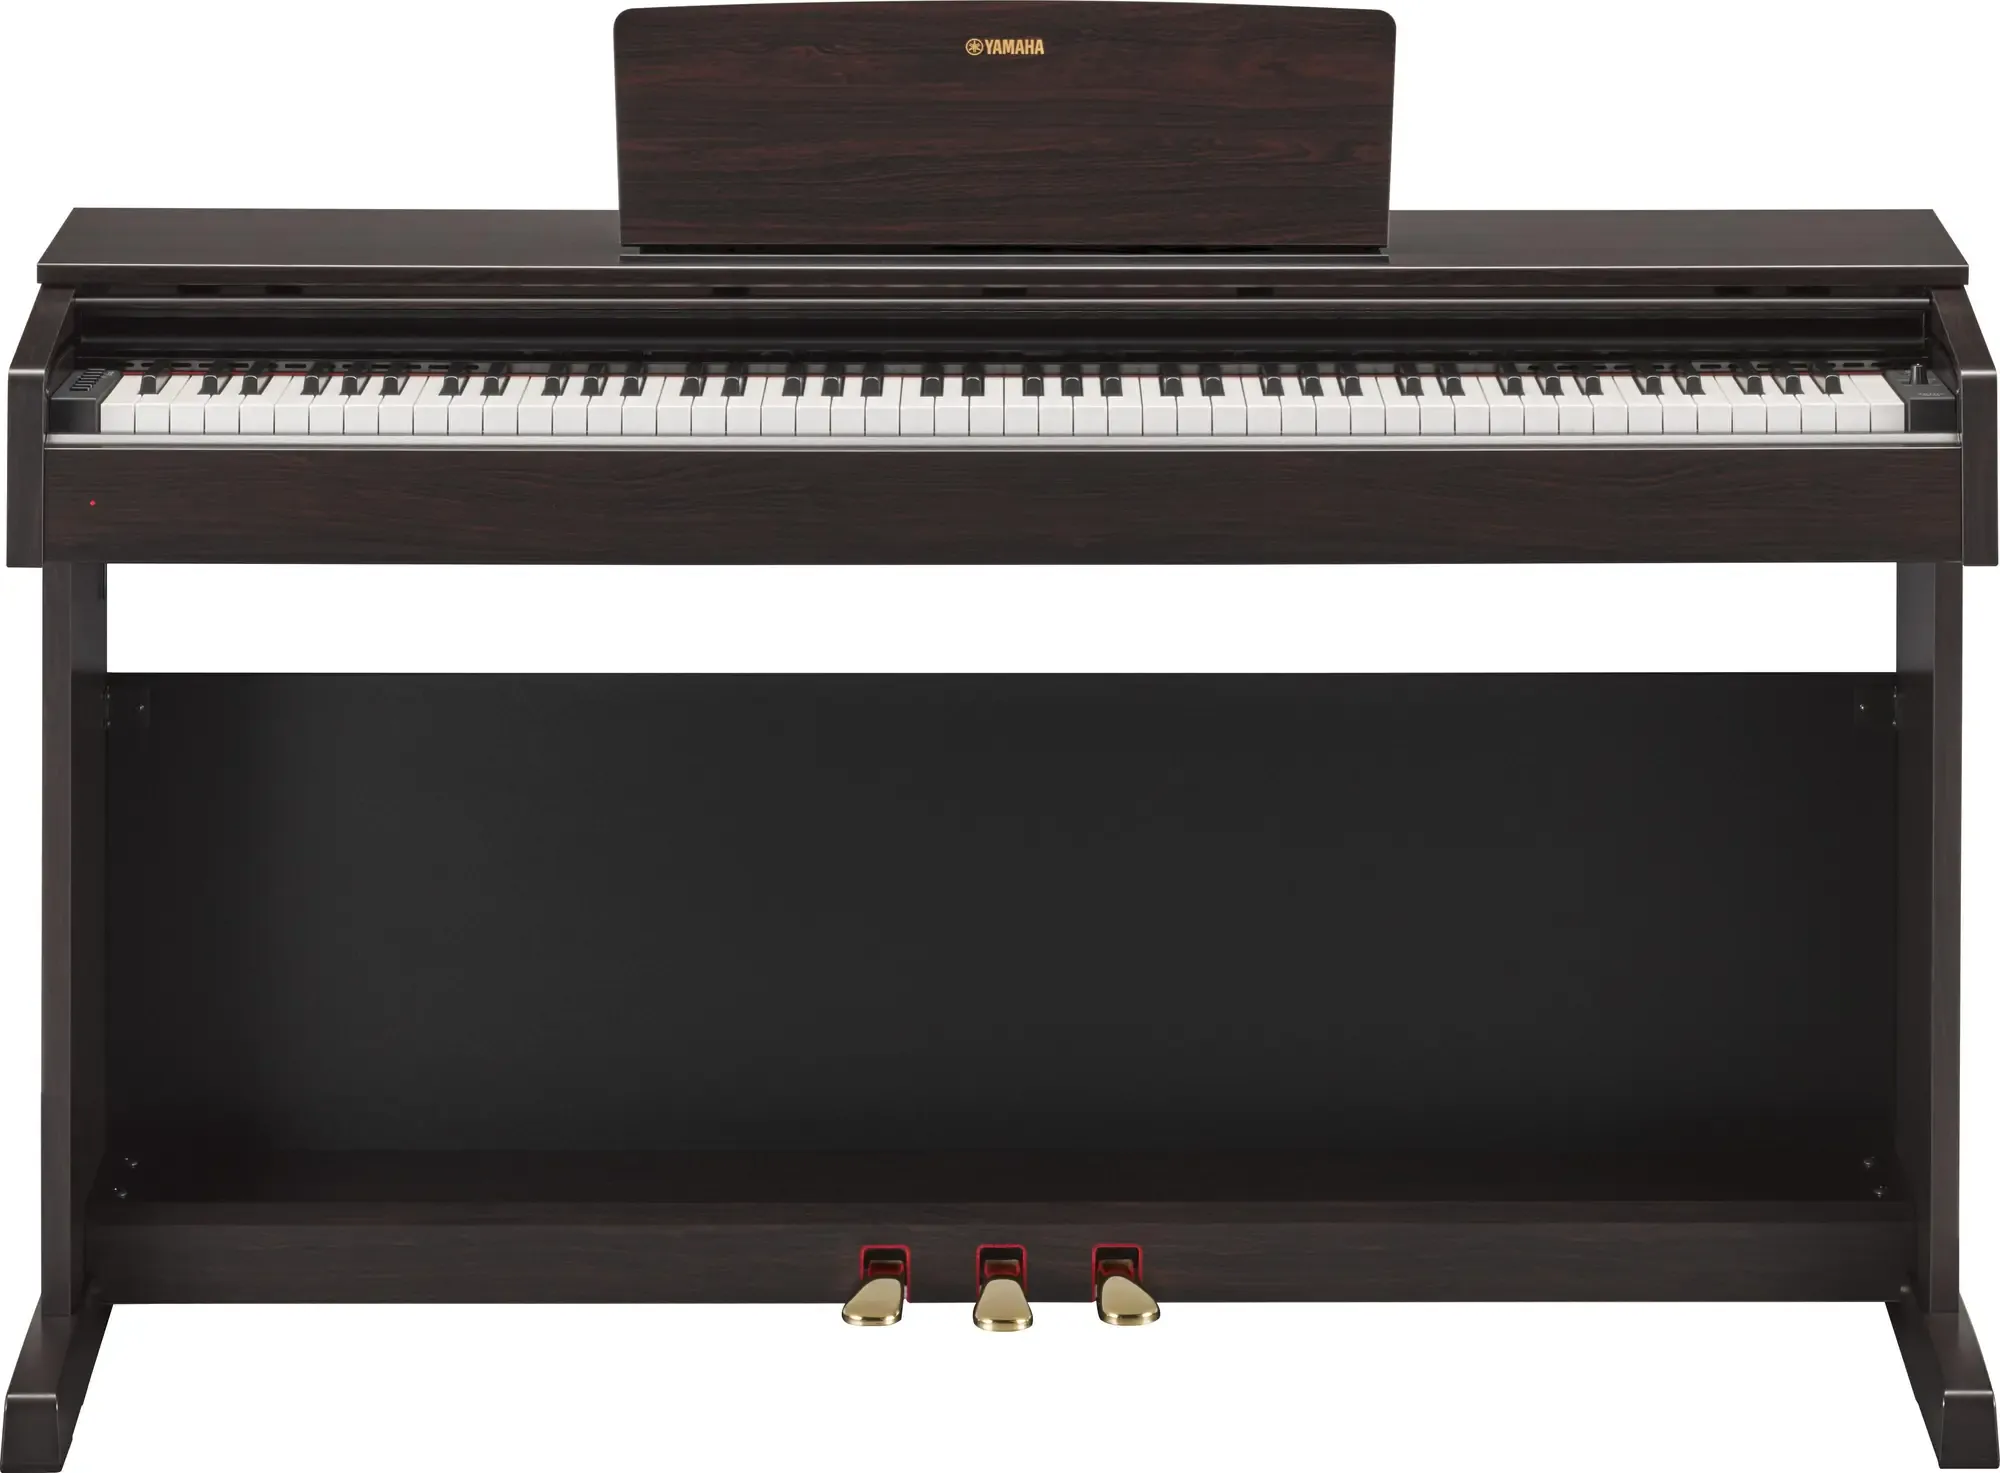 Обзор цифрового пианино Yamaha YDP-143R